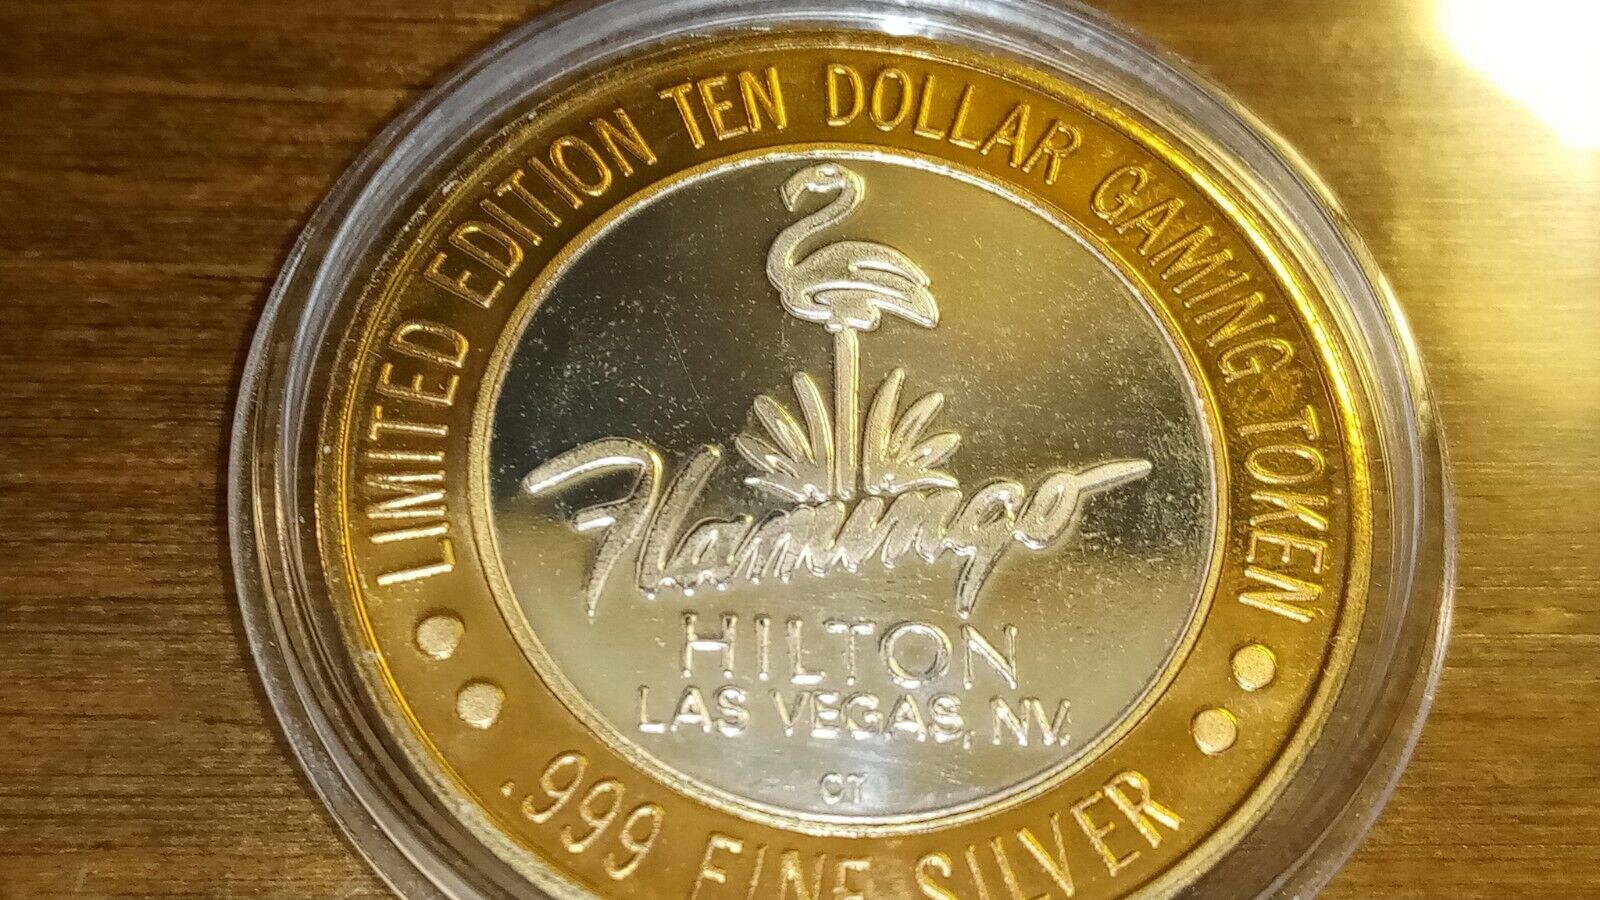 1946 Flamingo Hilton Las Vegas, NV. $10 Fine Silver Casino Gaming Token